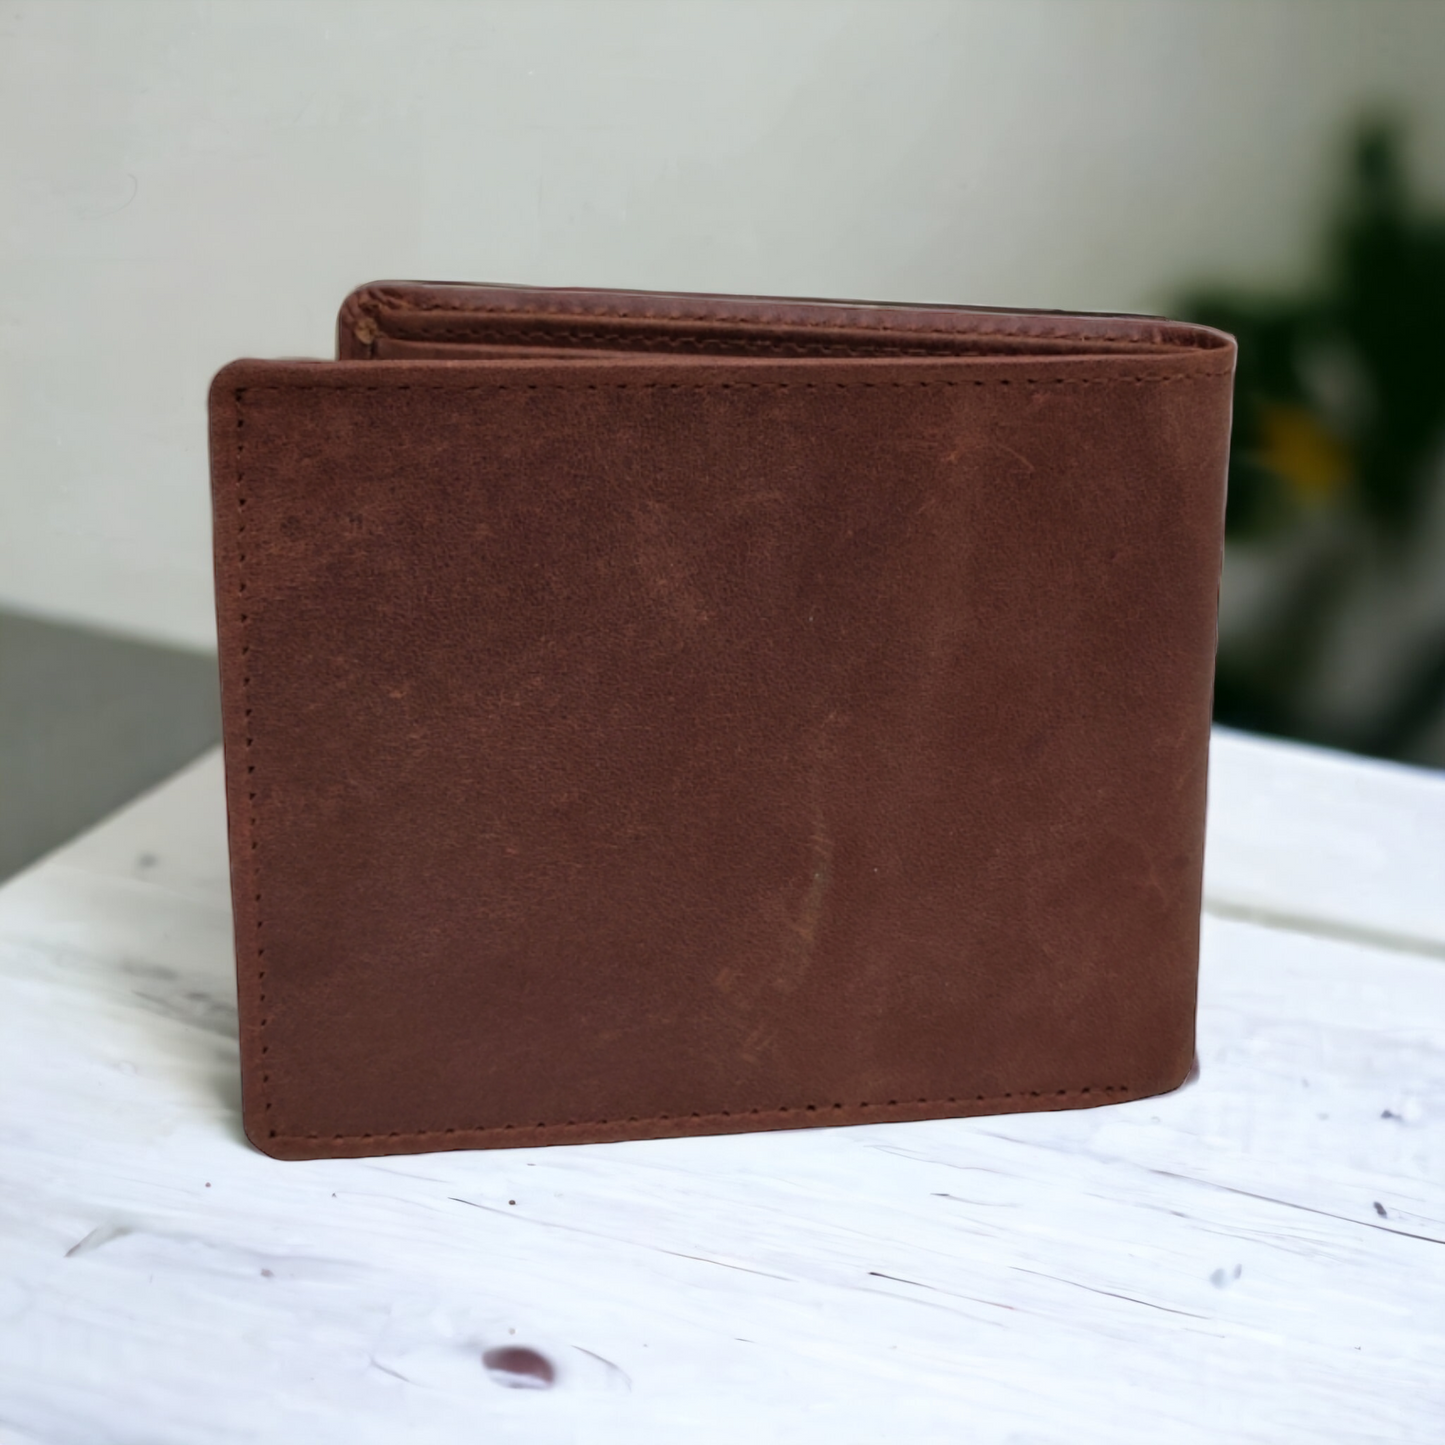 LINDSEY STREET Genuine Leather Wallet for Men | Leather Money Bag | Gift for Him